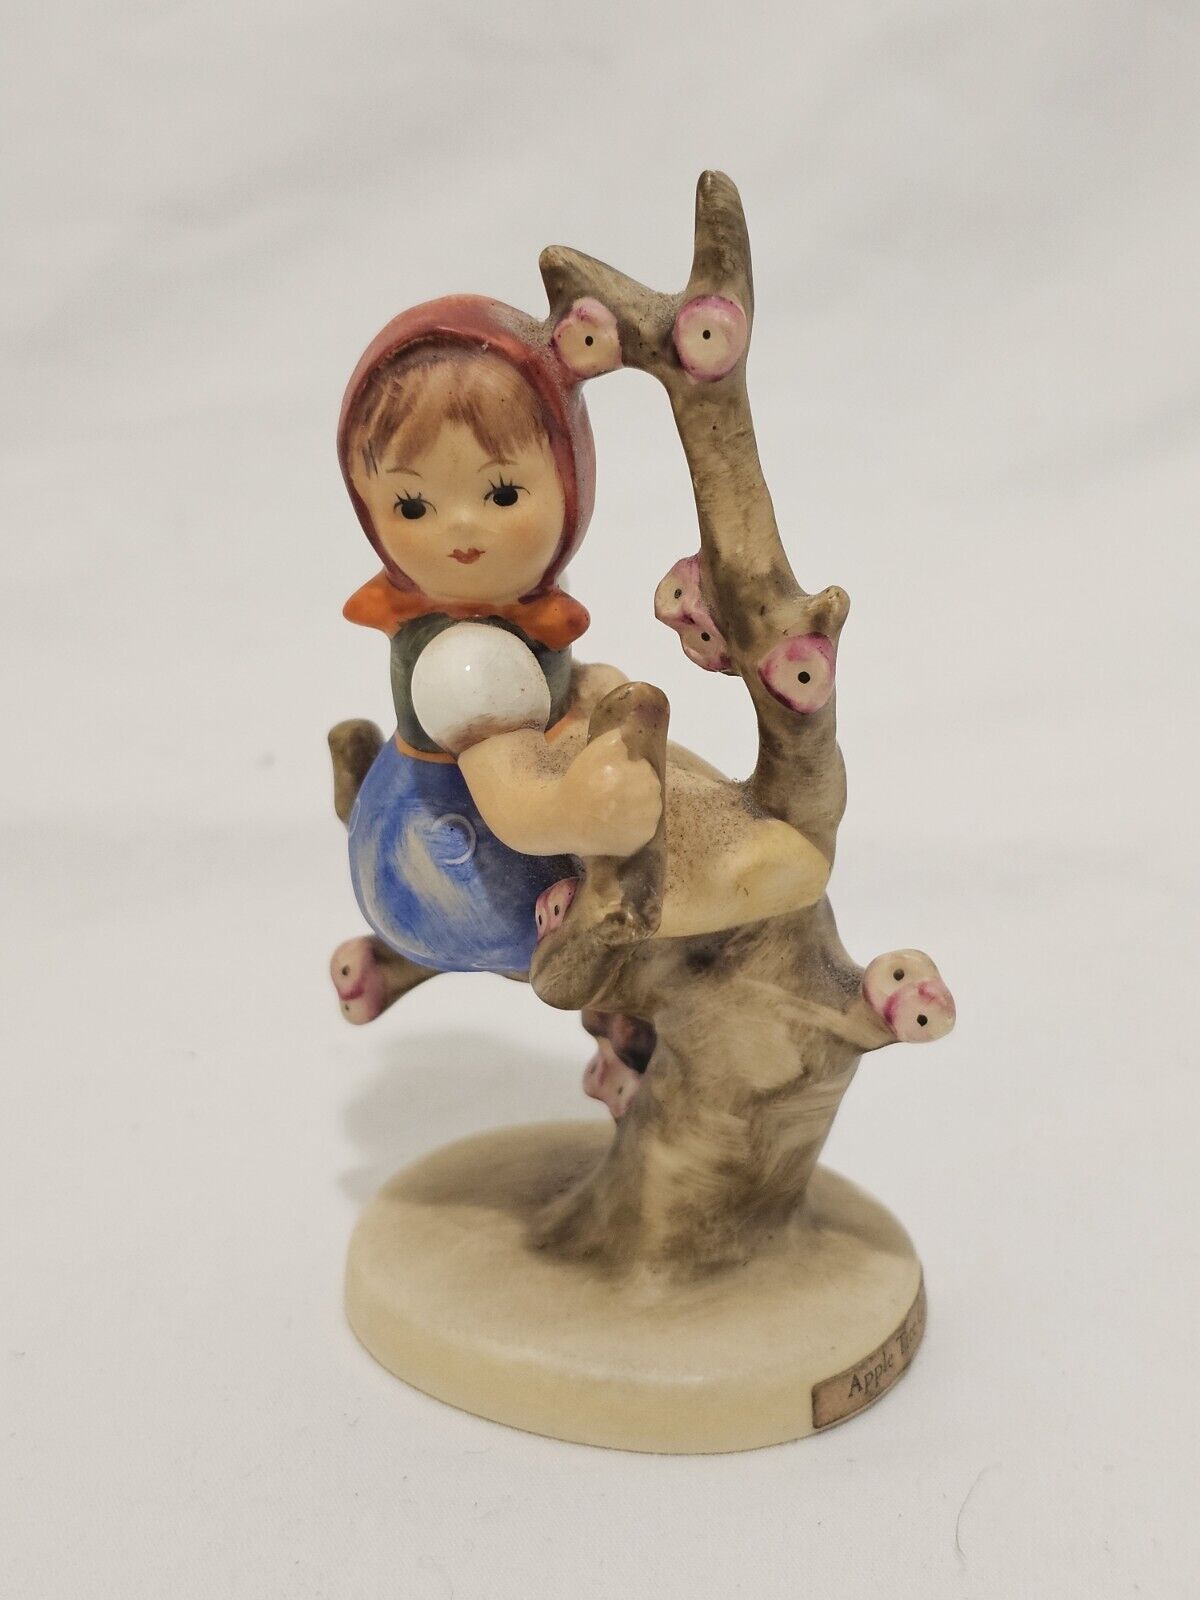 Vintage Hummel Apple Tree Girl Figurine Hand Painted Porcelain Germany Goebel 4”